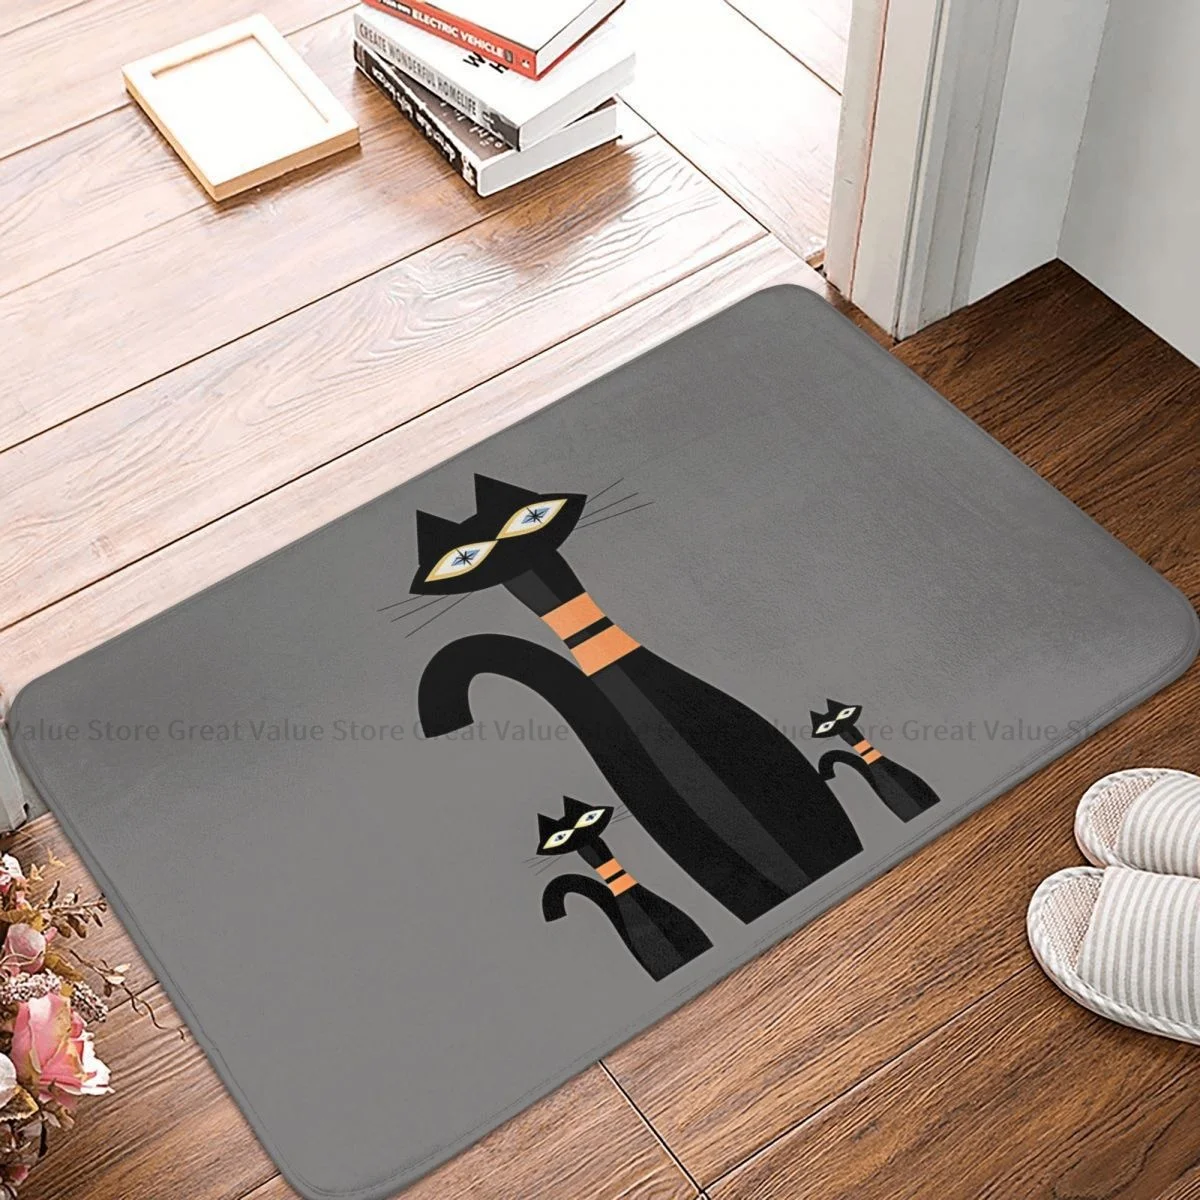 

Mid Century Meow Black Cat Animal Bath Non-Slip Carpet Family Living Room Mat Entrance Door Doormat Floor Decoration Rug